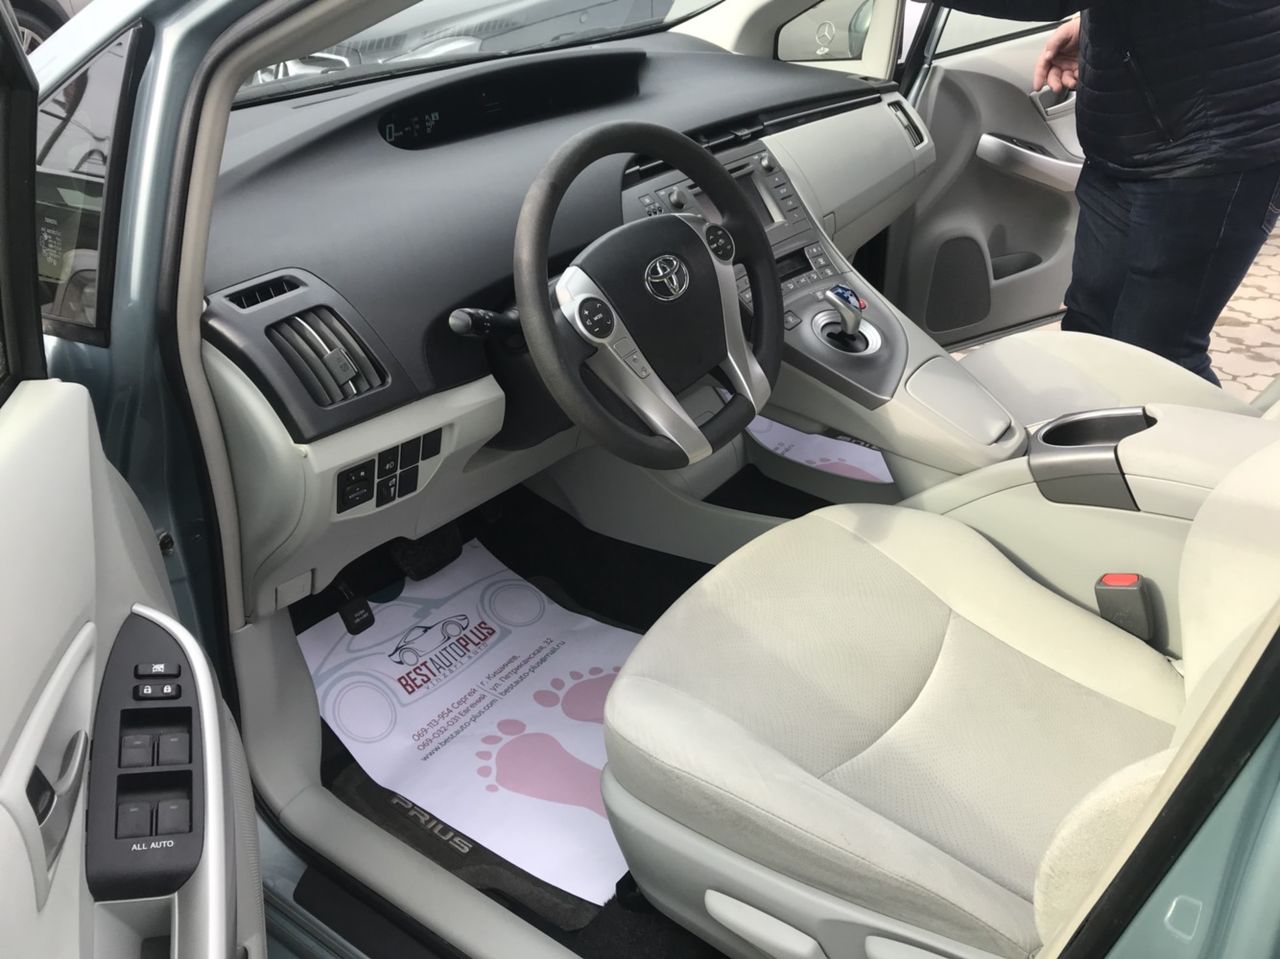 Toyota Prius -Masini la Procat Chisinău Ieftine7